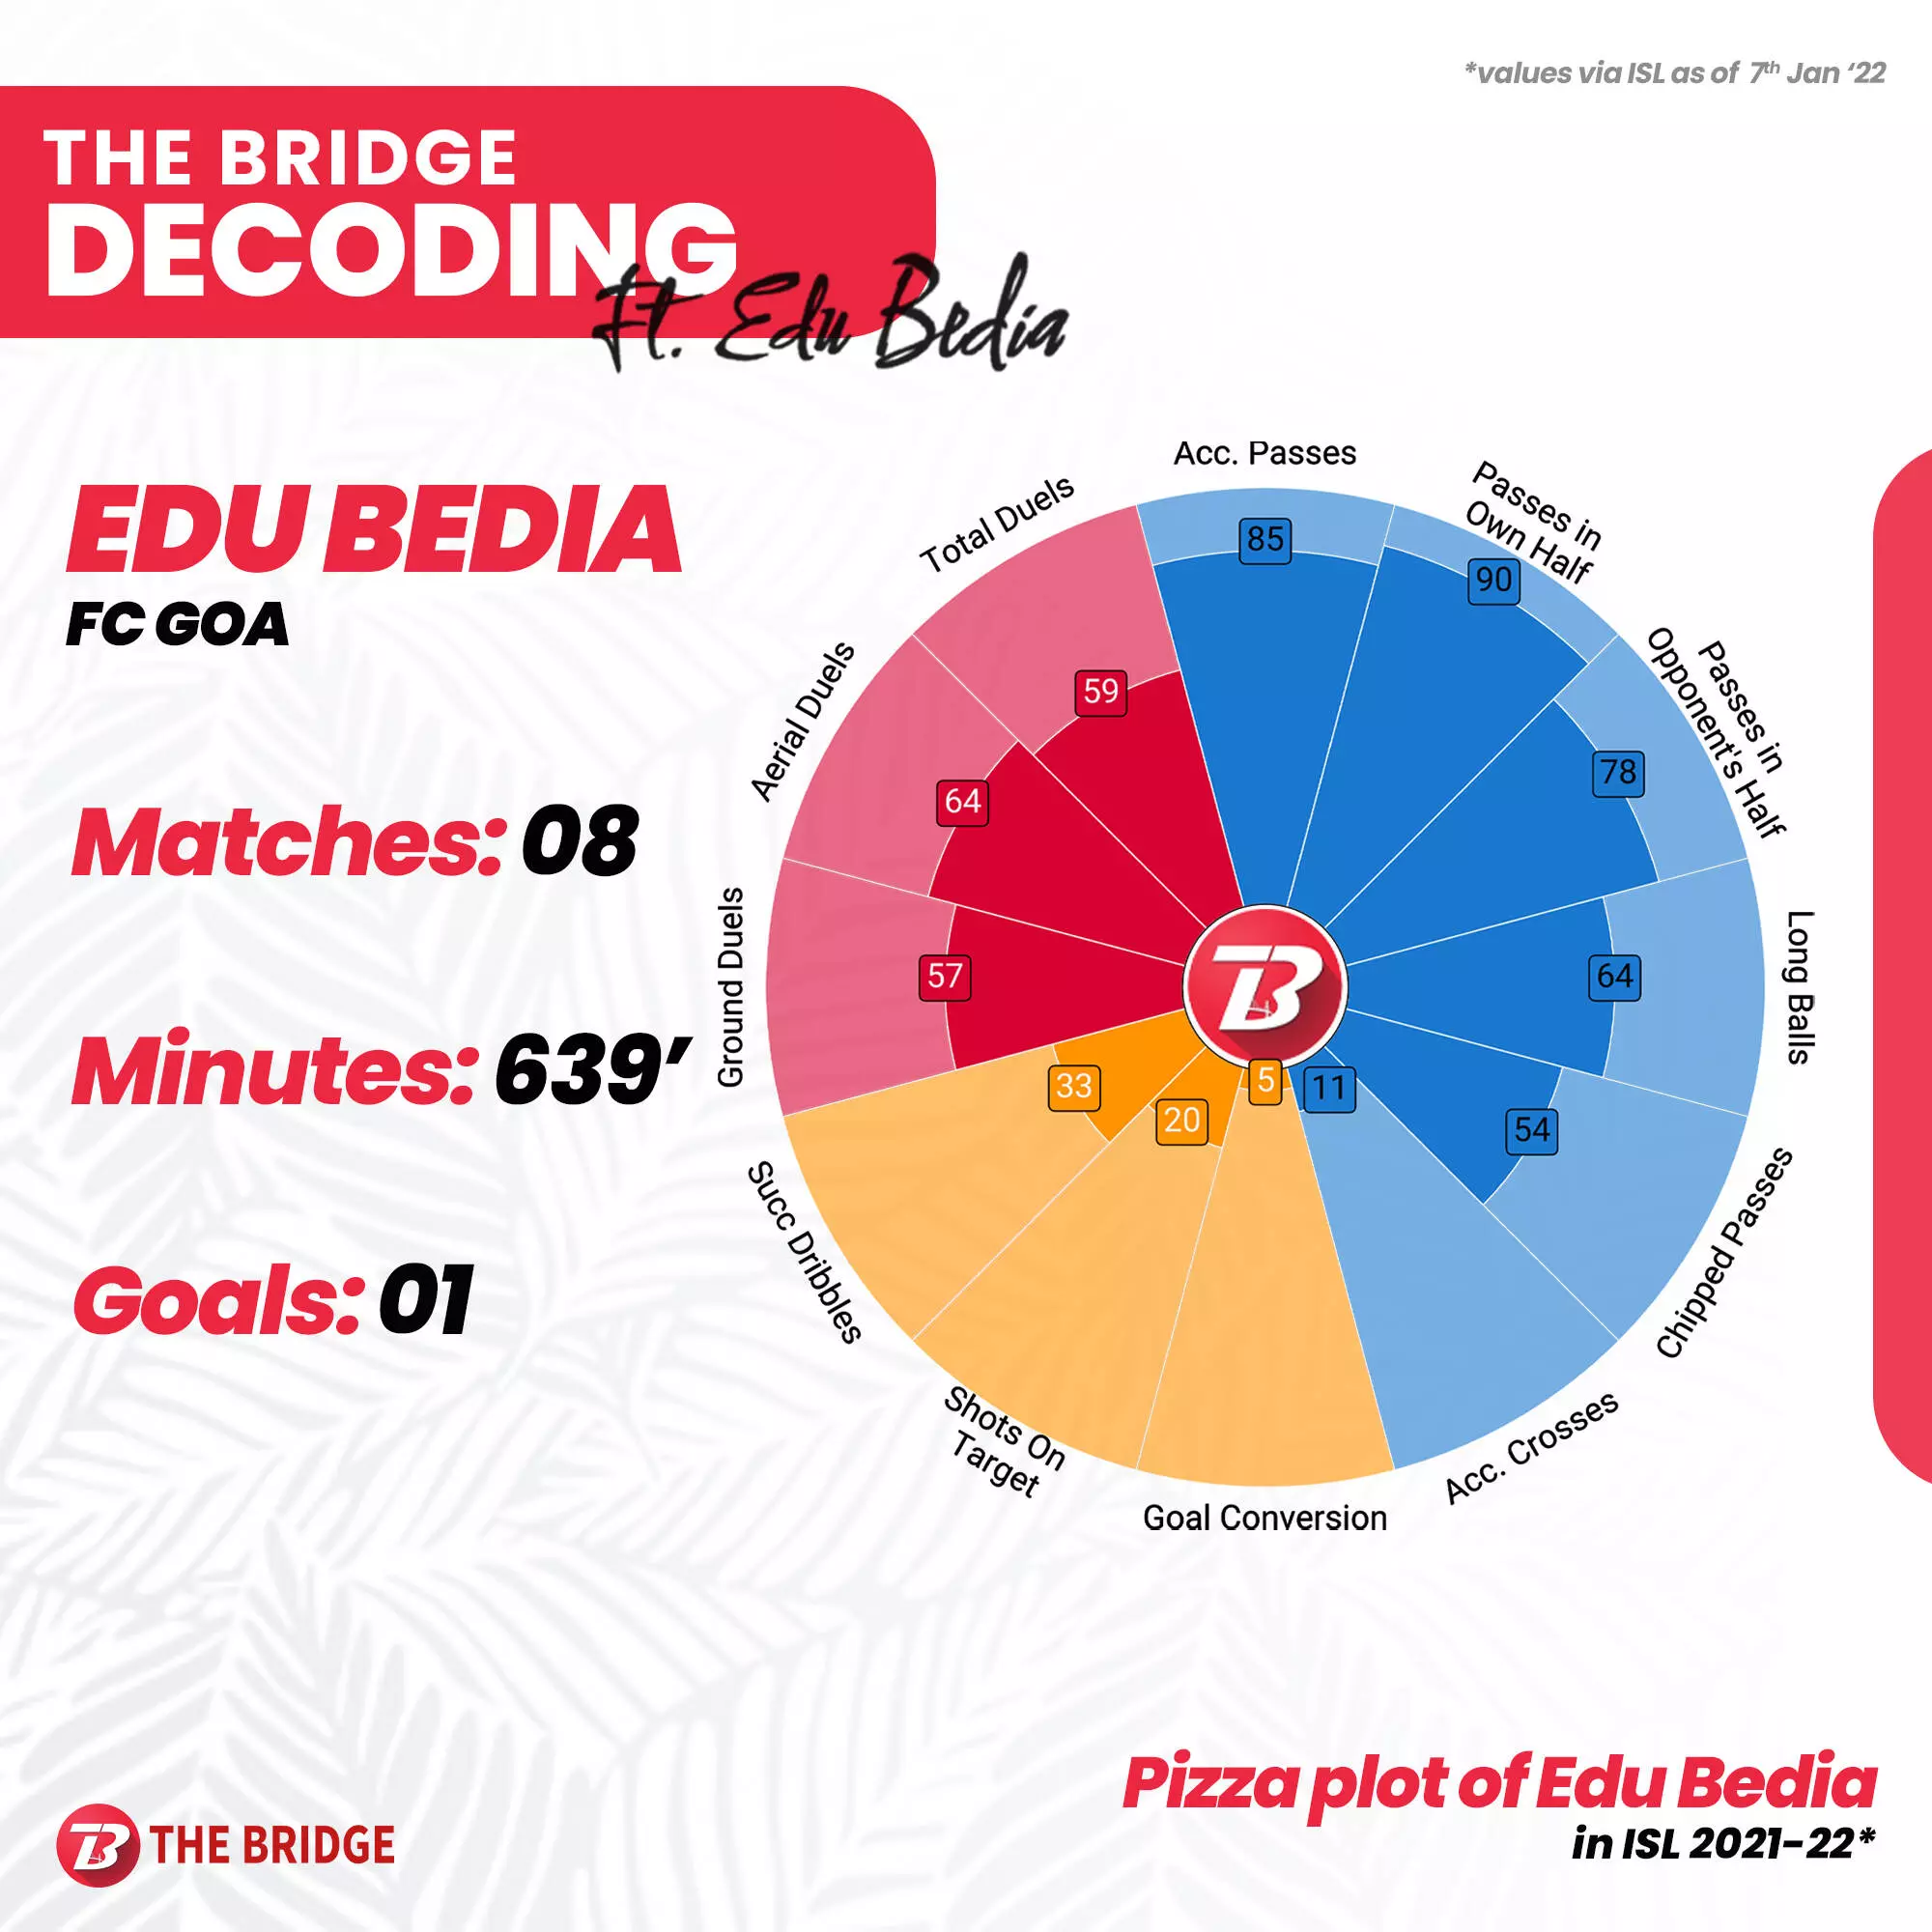 Pizza Plot of Edu Bedias contribution to FC Goa